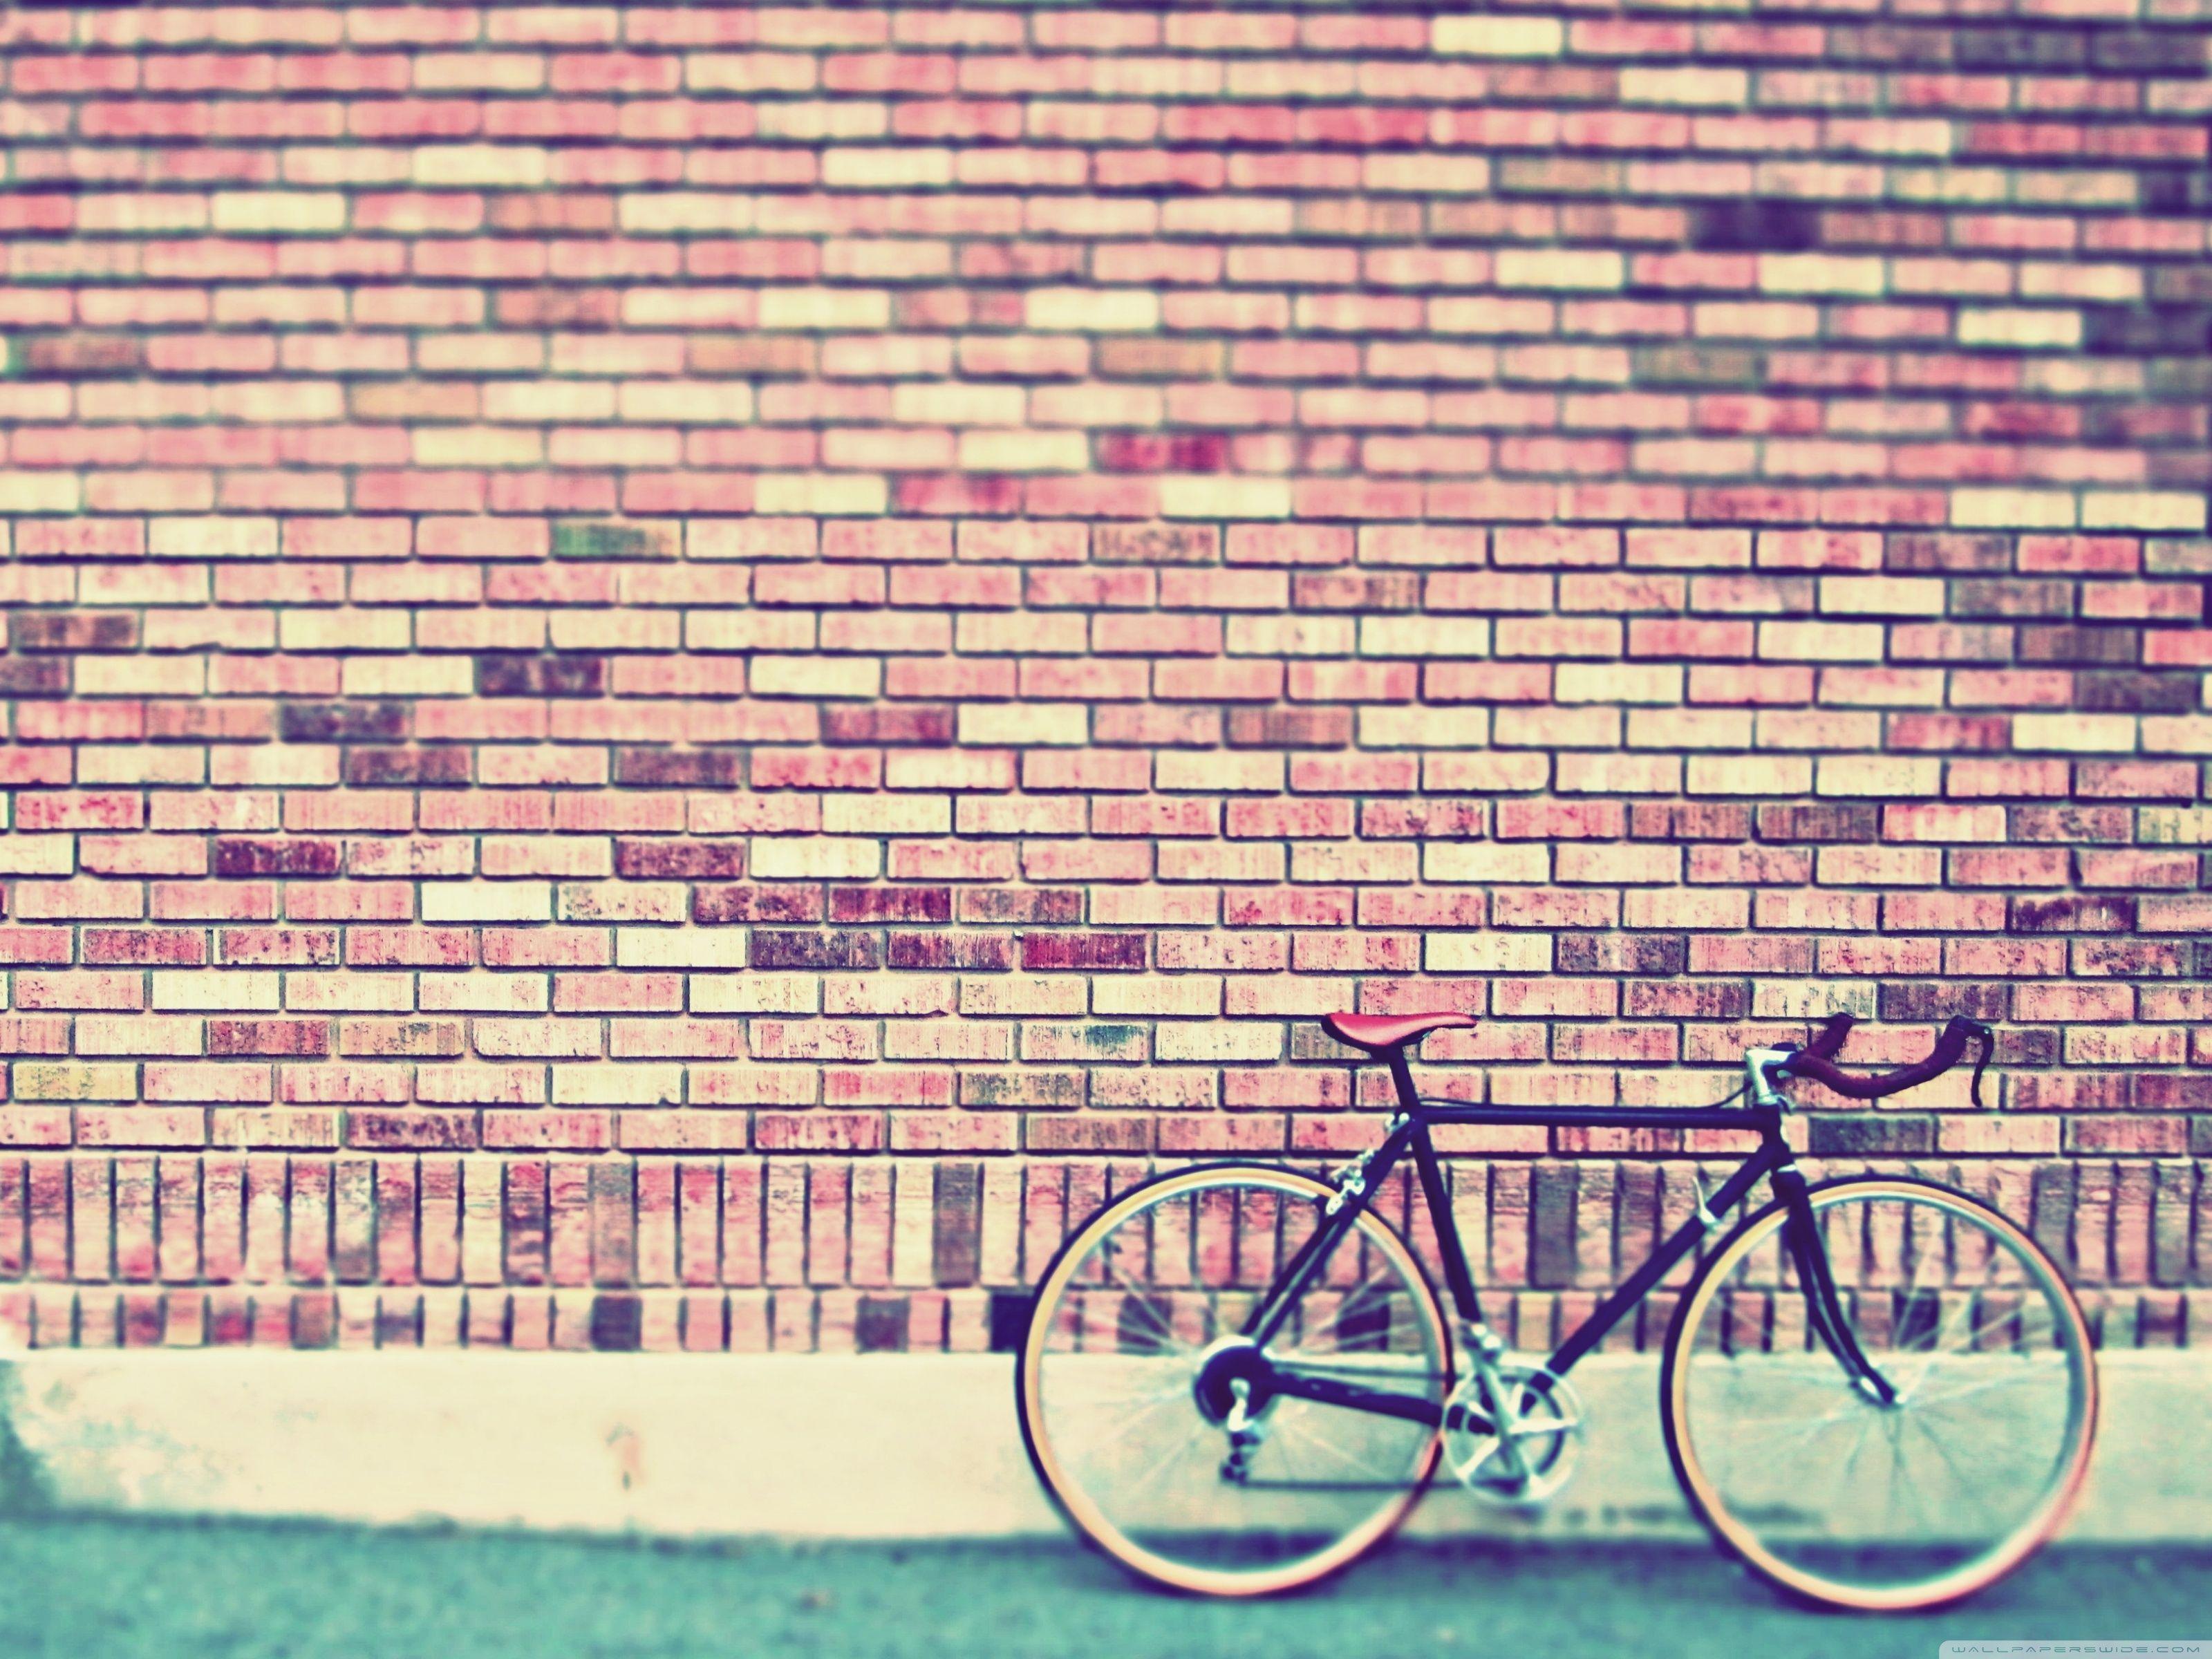 desktop wallpaper vintage bicycle